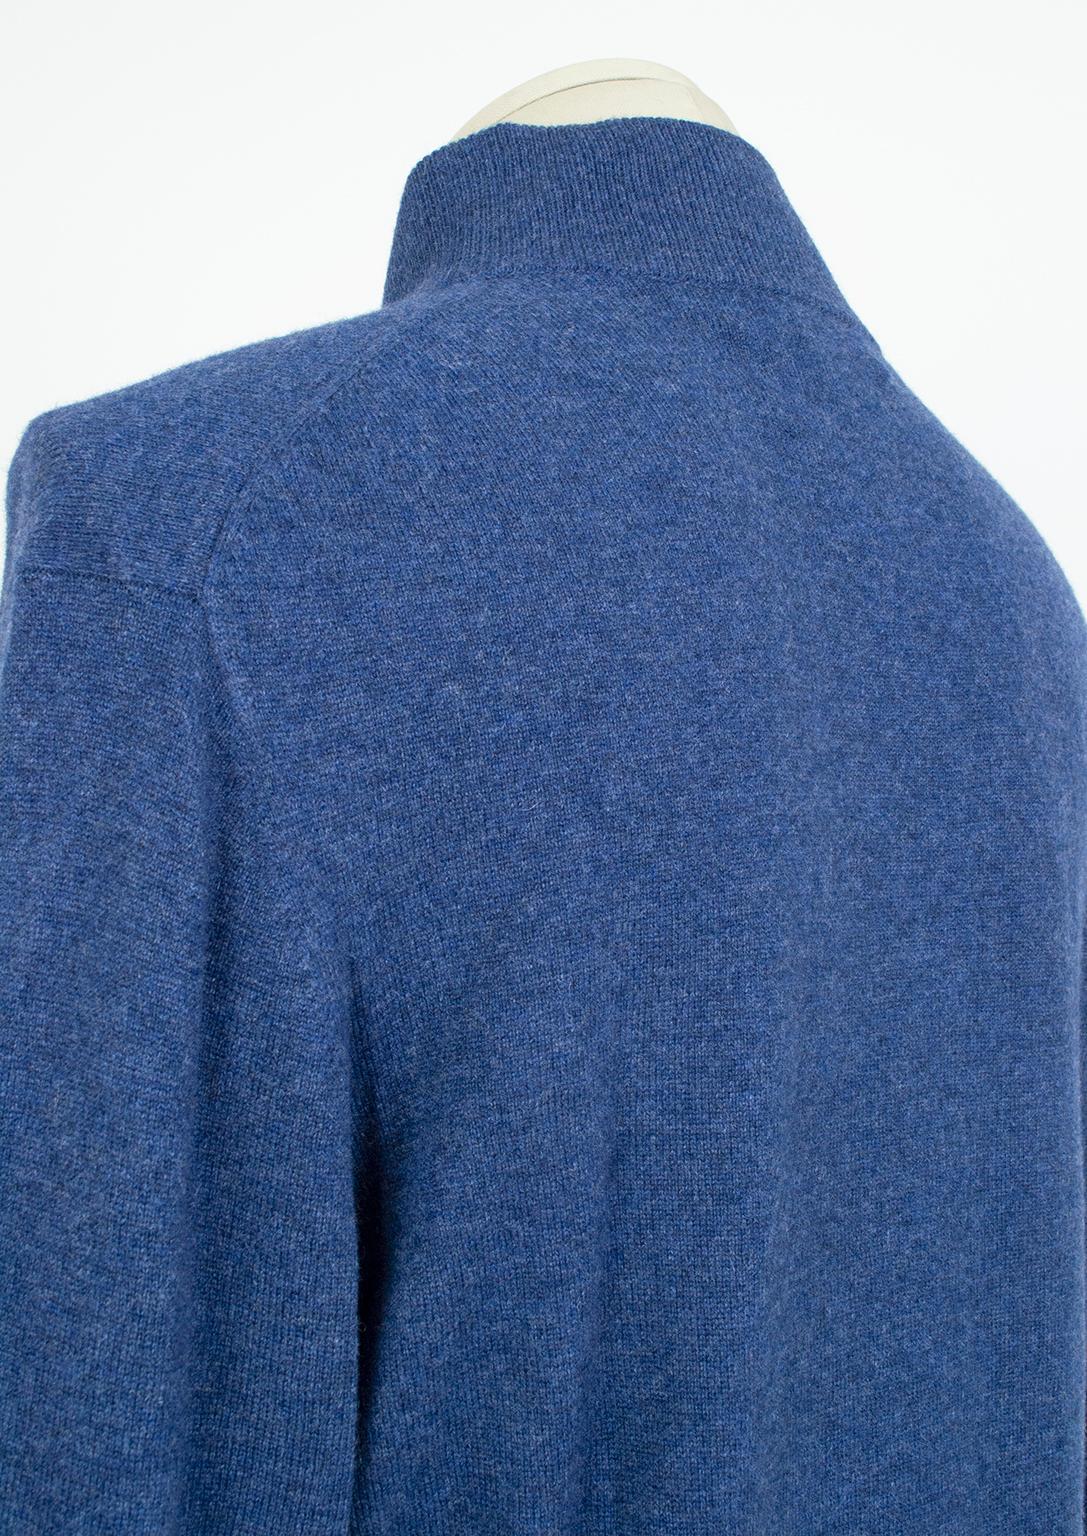 Men's New *Large Size* Men’s Neiman Marcus Blue Cashmere Half-Zip Sweater – XXL, 2019 For Sale